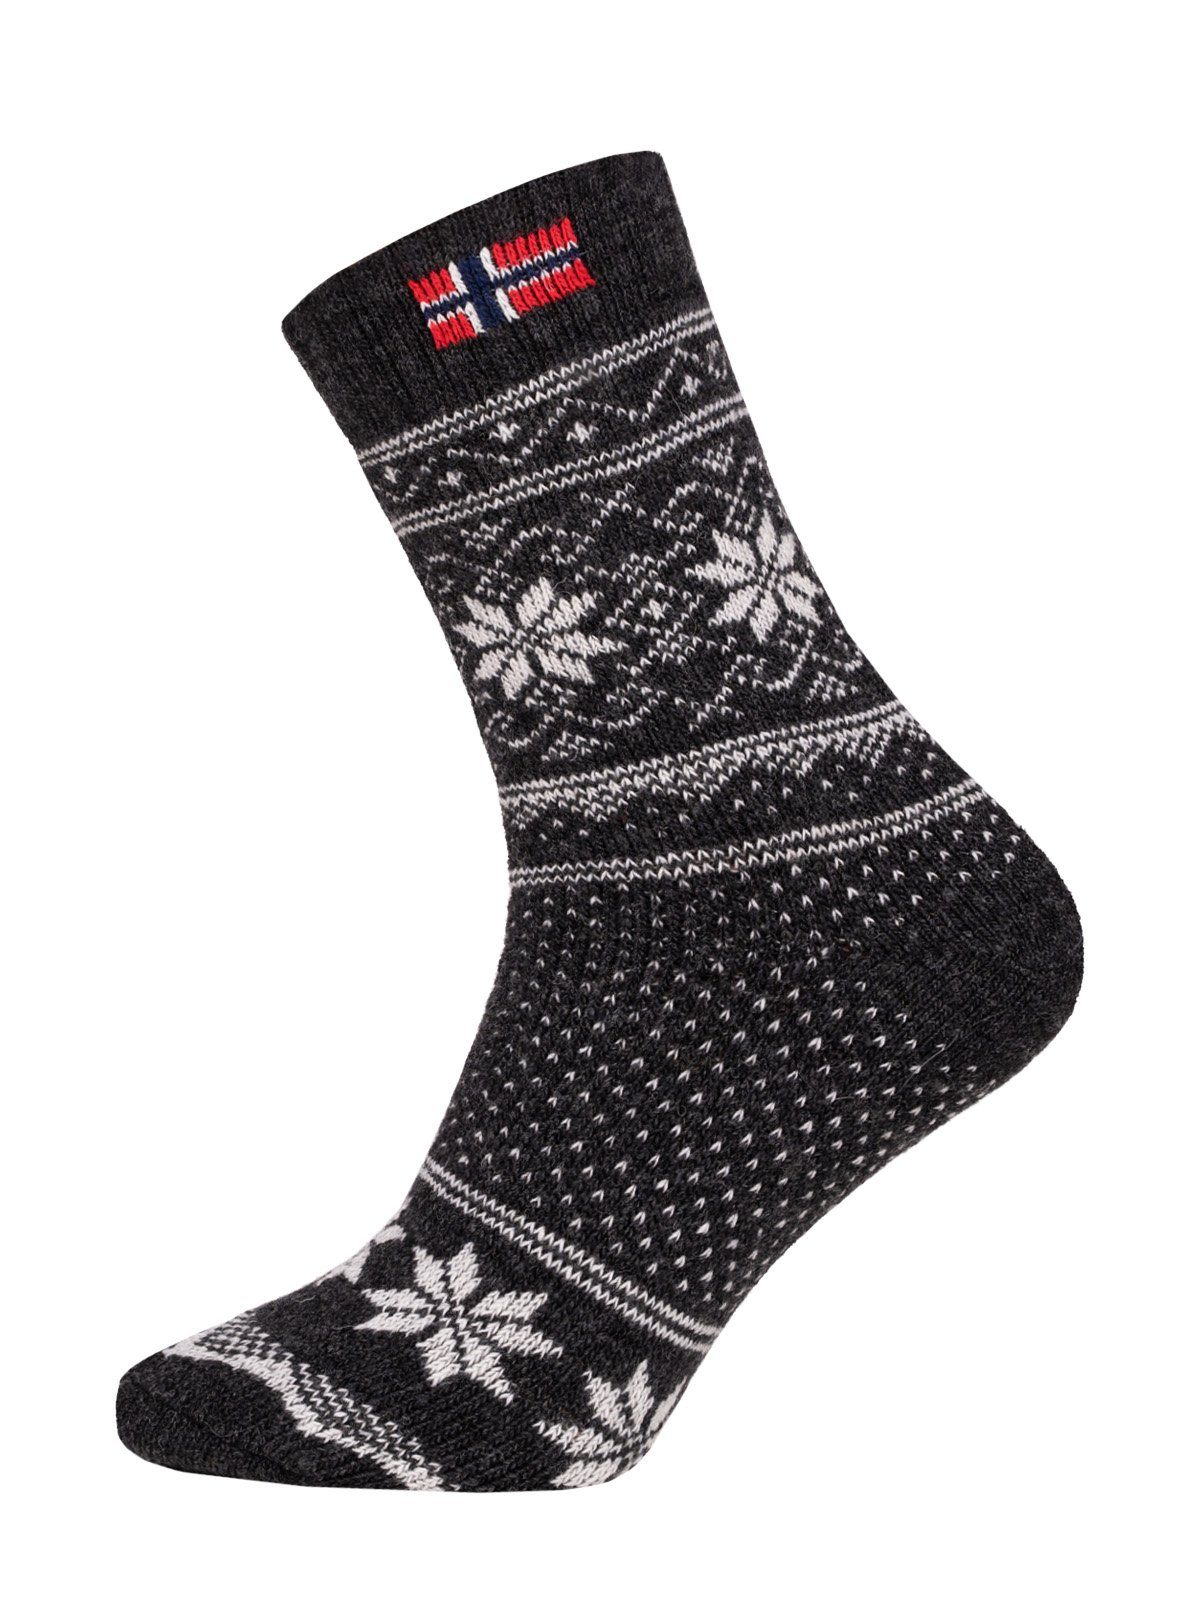 HomeOfSocks Norwegersocken Skandinavische Wollsocke "Jacquard Norwegen" Nordic Kuschelsocken Dicke Socken Hyggelig Warm Hoher 80% Wollanteil Norwegischem Design Anthrazit